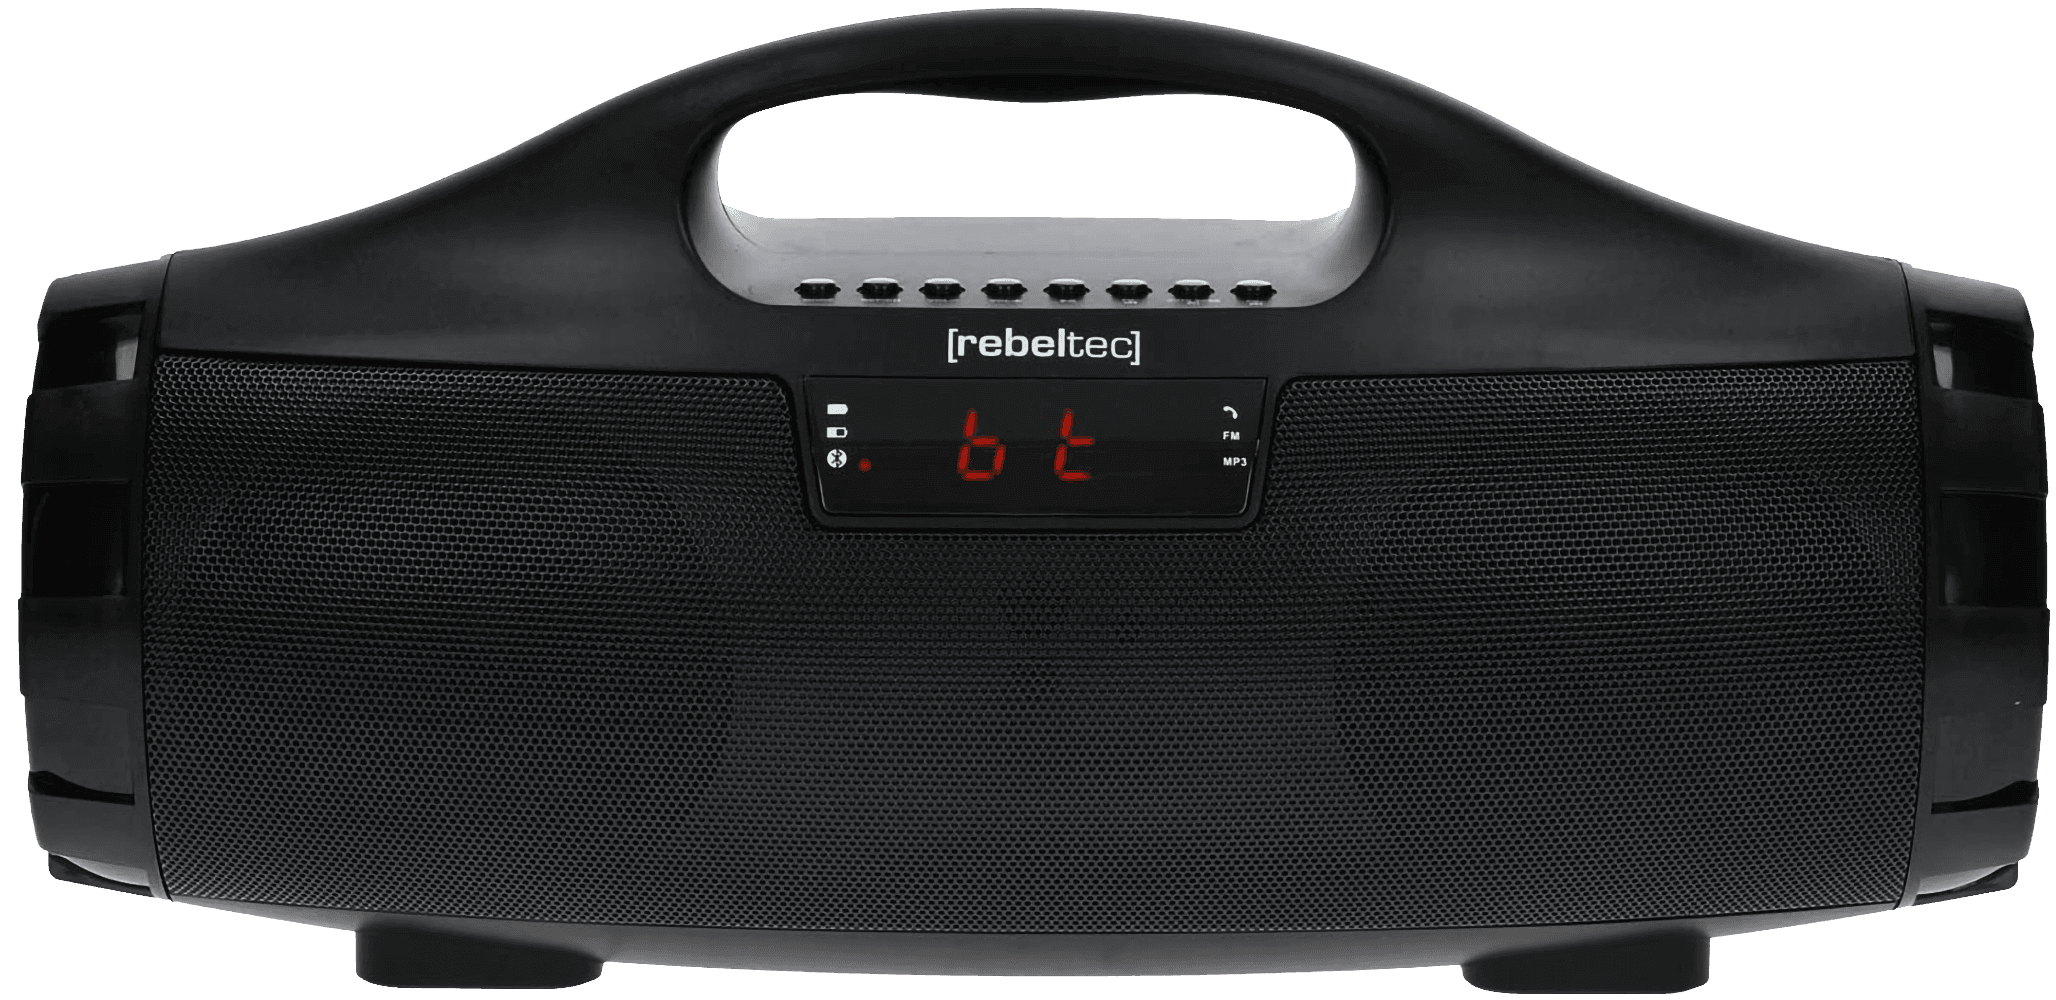 HTC Desire 825 kompatibilis bluetooth hangszóró Rebeltec Soundbox 390 fekete